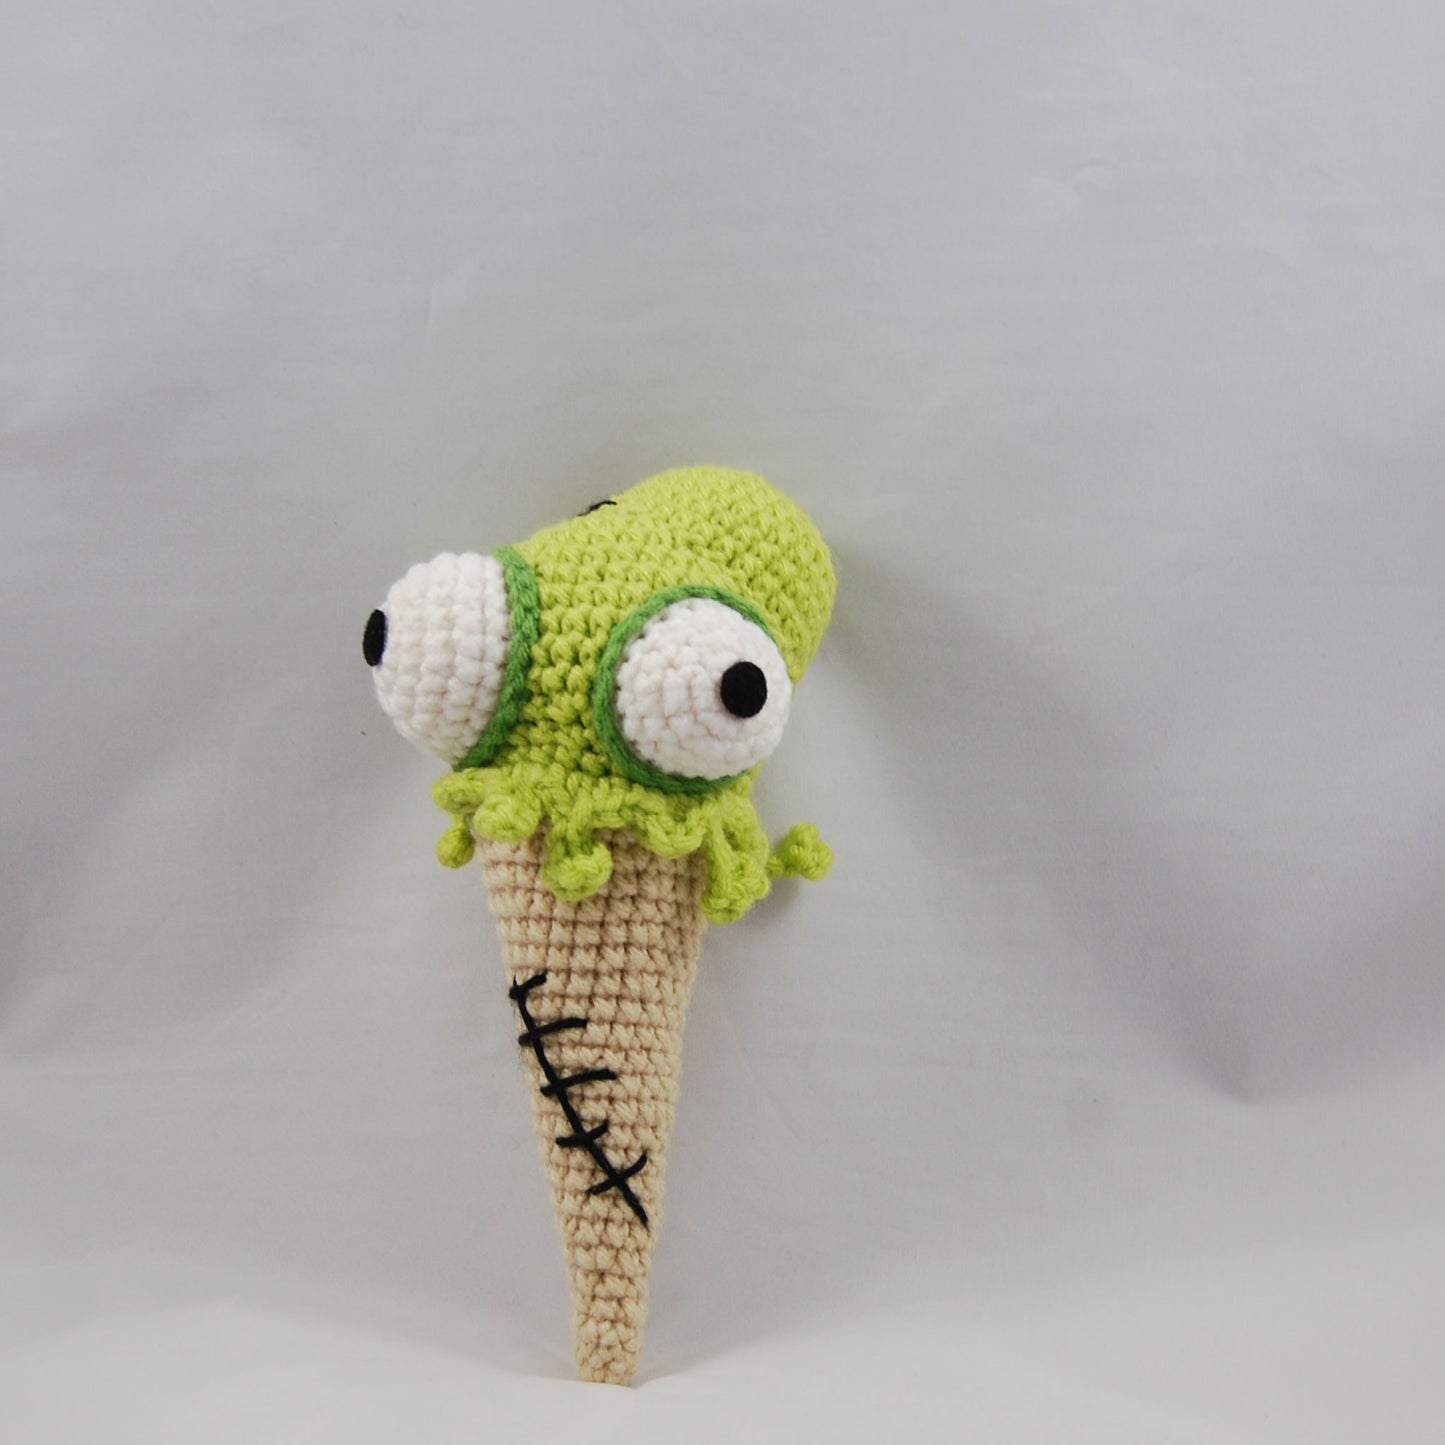 Ice Scream Cone Crochet Pattern